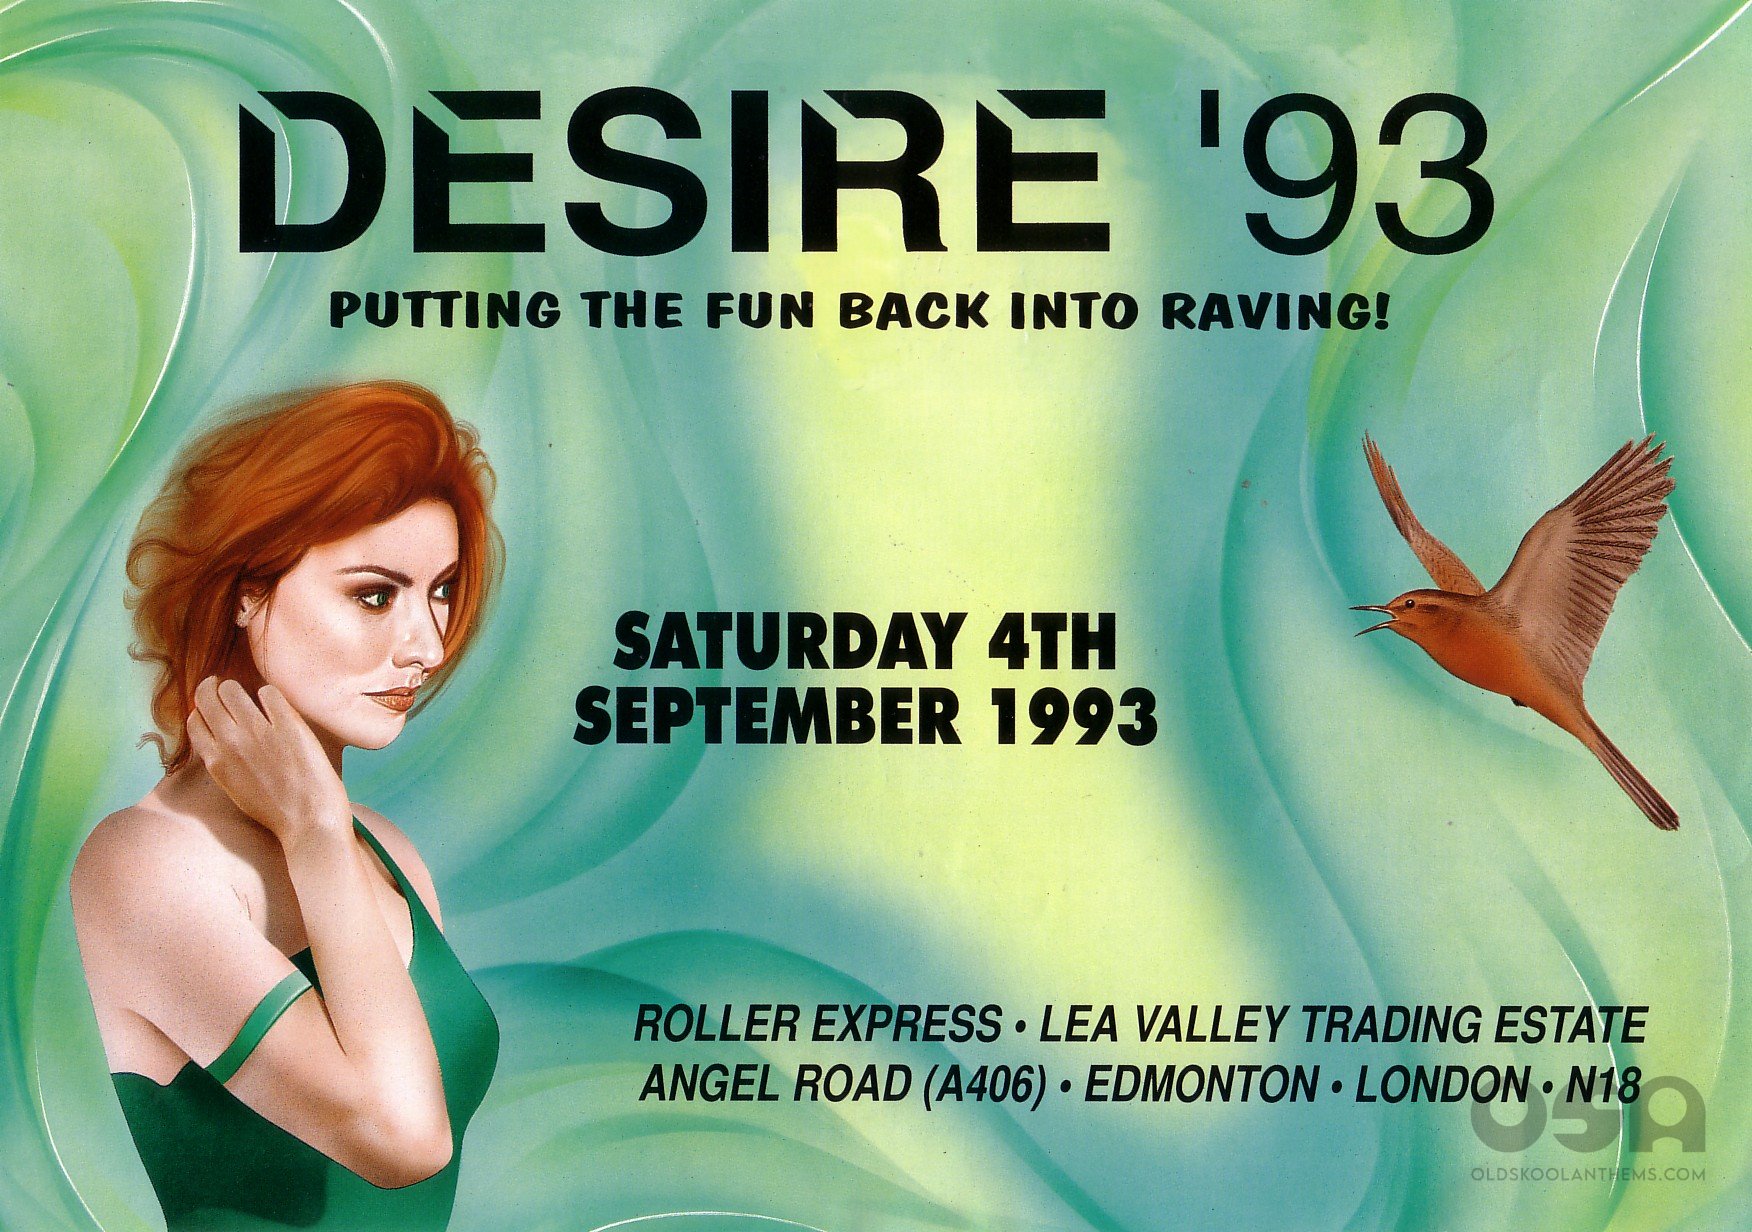 1_Desire_93_-_Sat_4th_Sept_93_-_Roller_Express_Edmonton_London.jpg